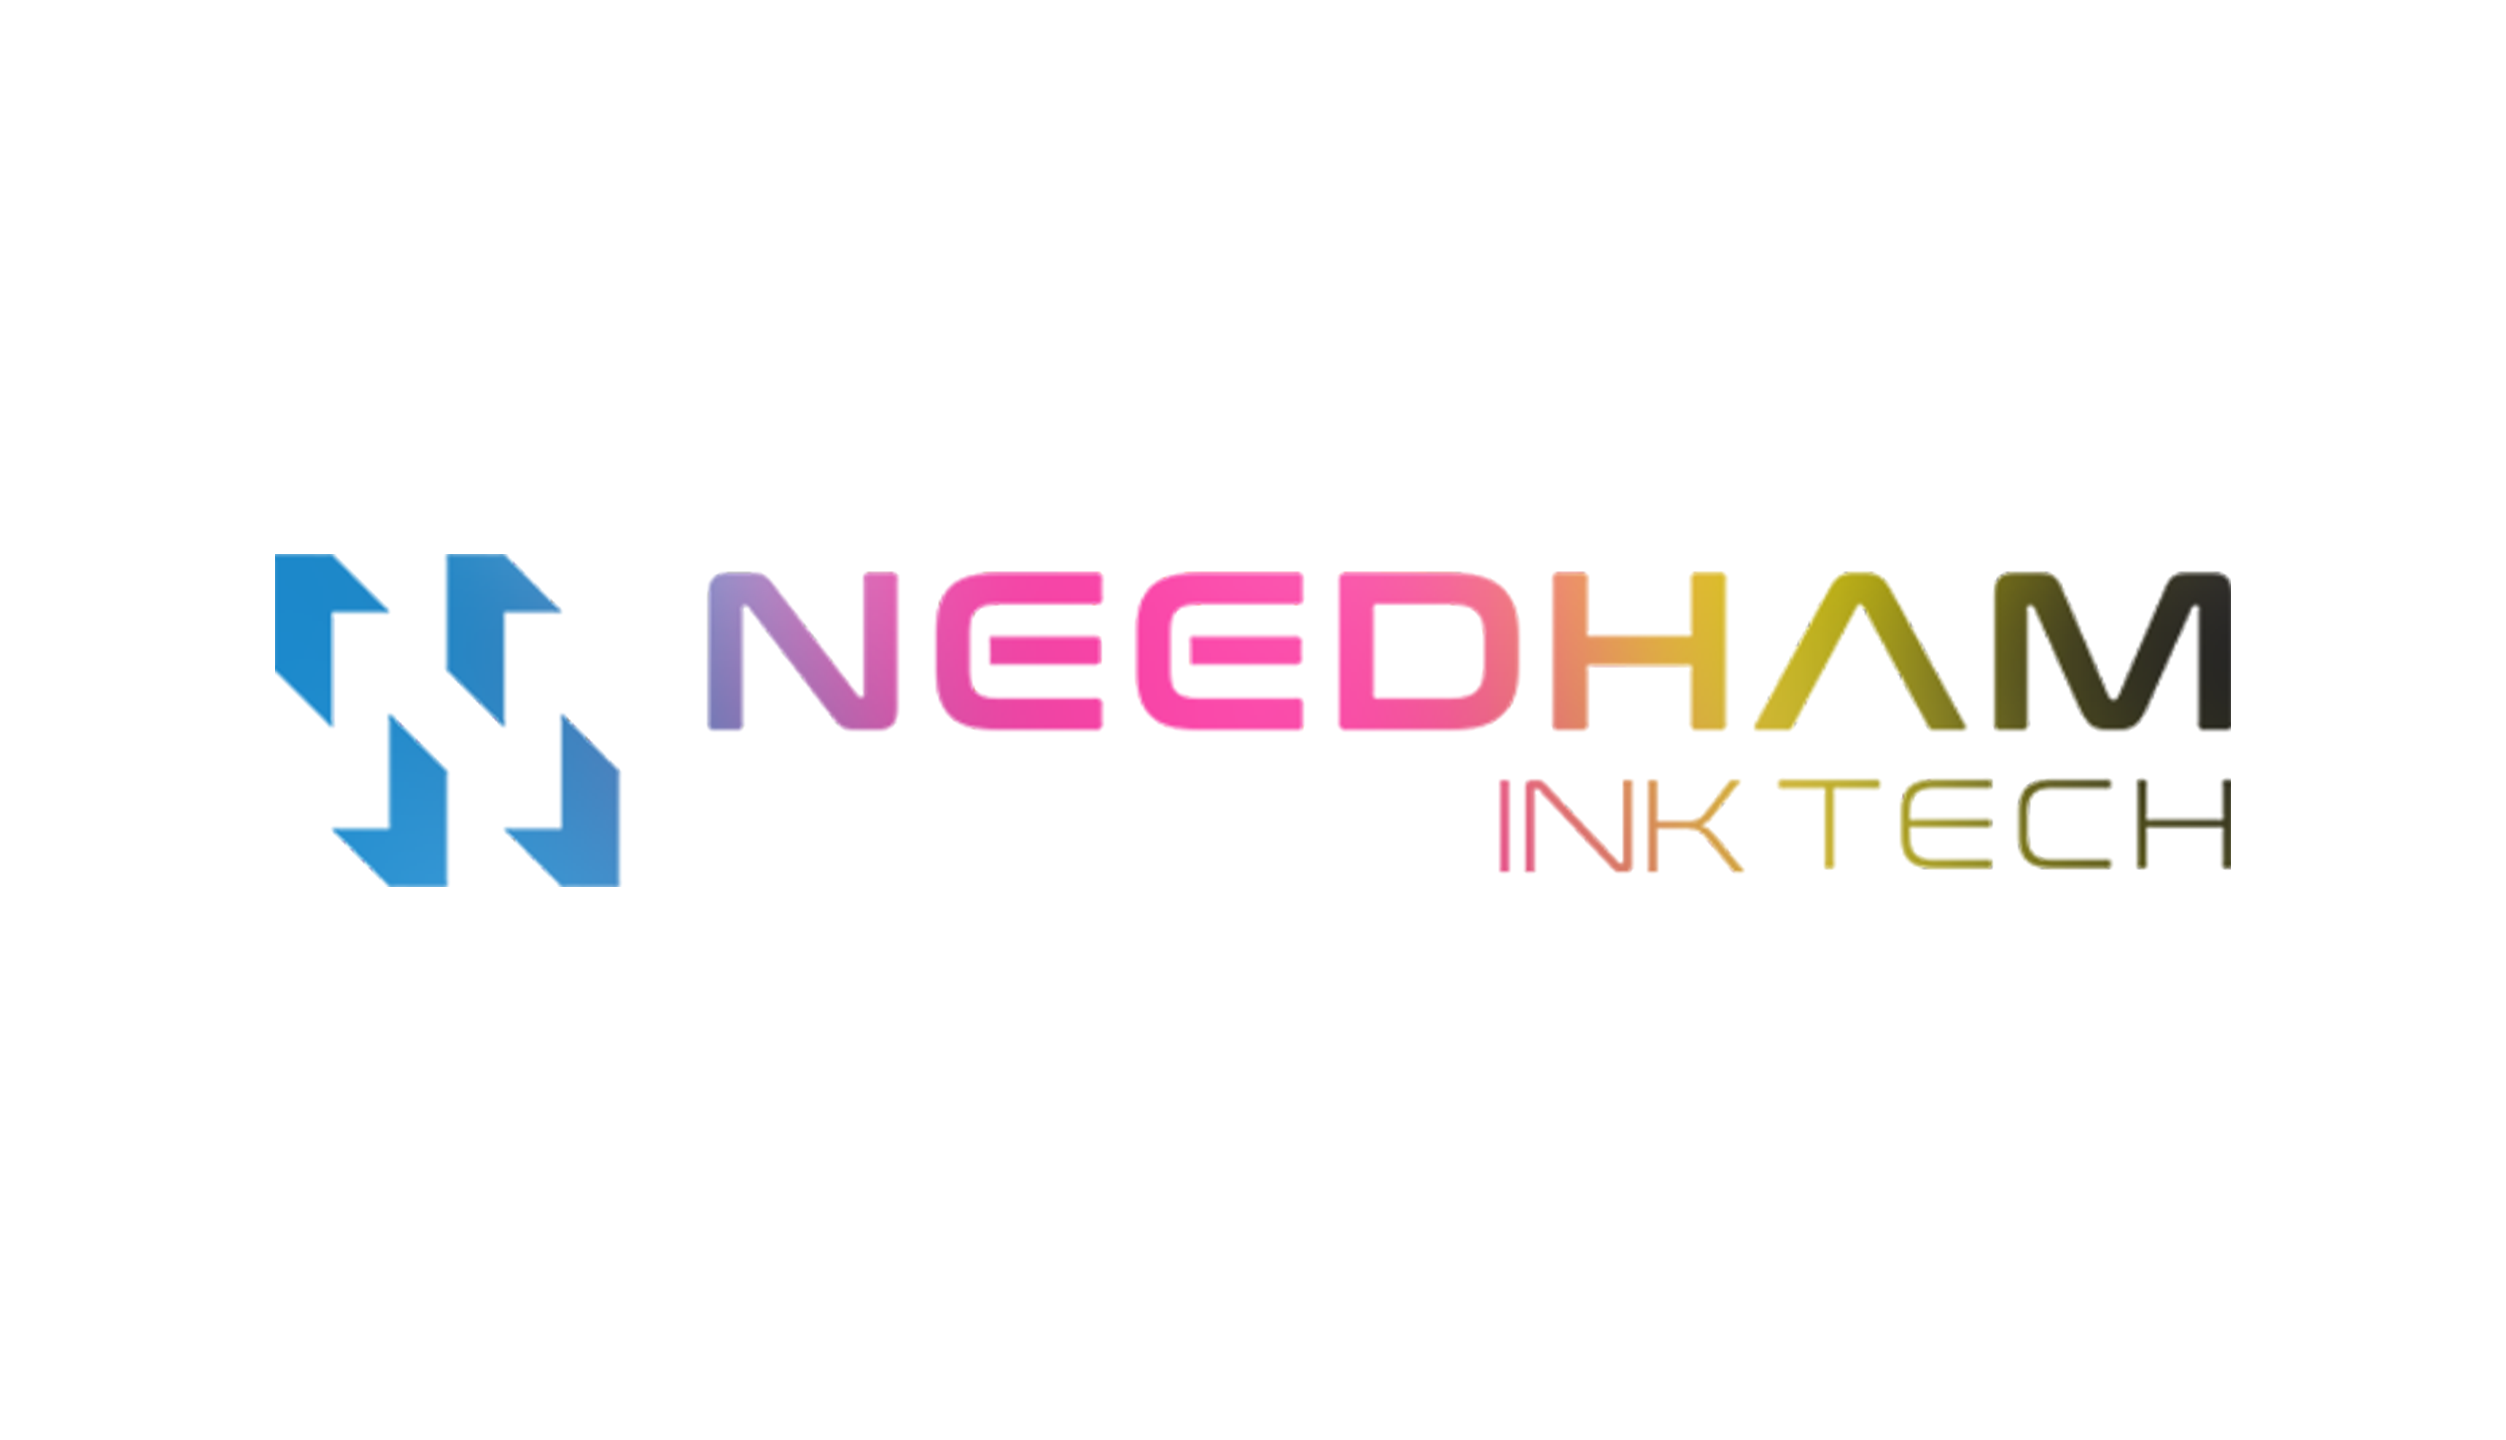 needham ink technologies logo on white background